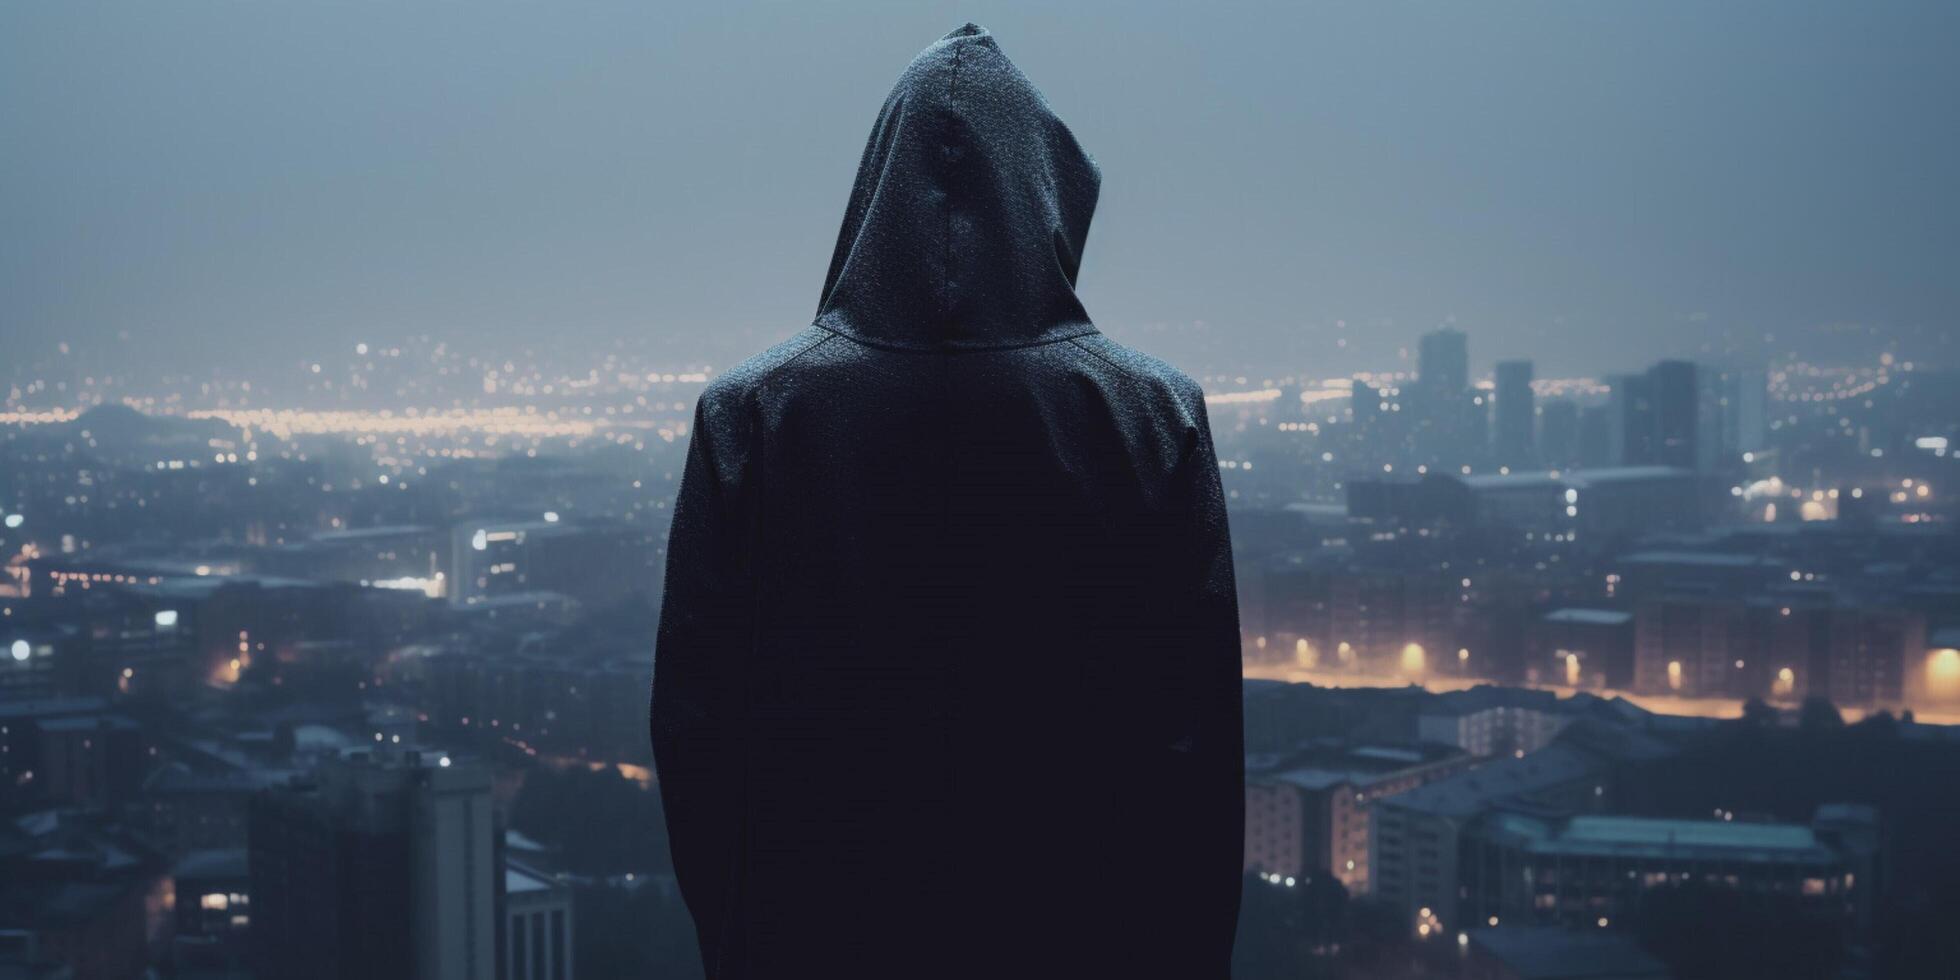 Hooded figure on rainy city photo